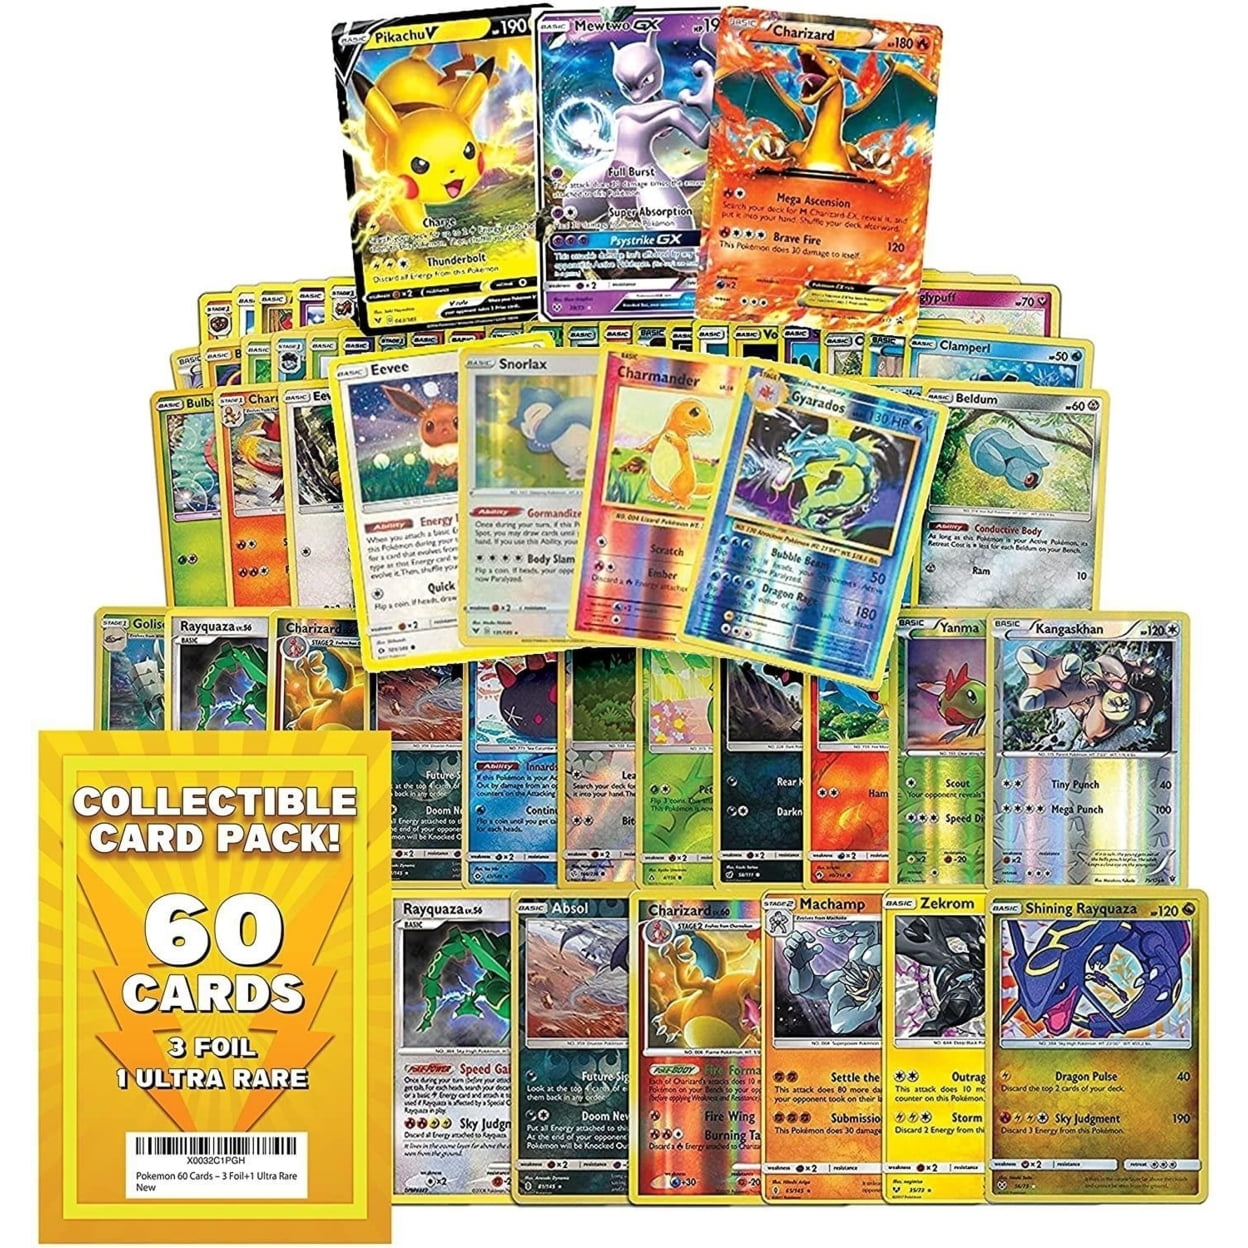 Pokémon - Pokémon - Trading card Ultra Rare Mewtwo! - Gold Star